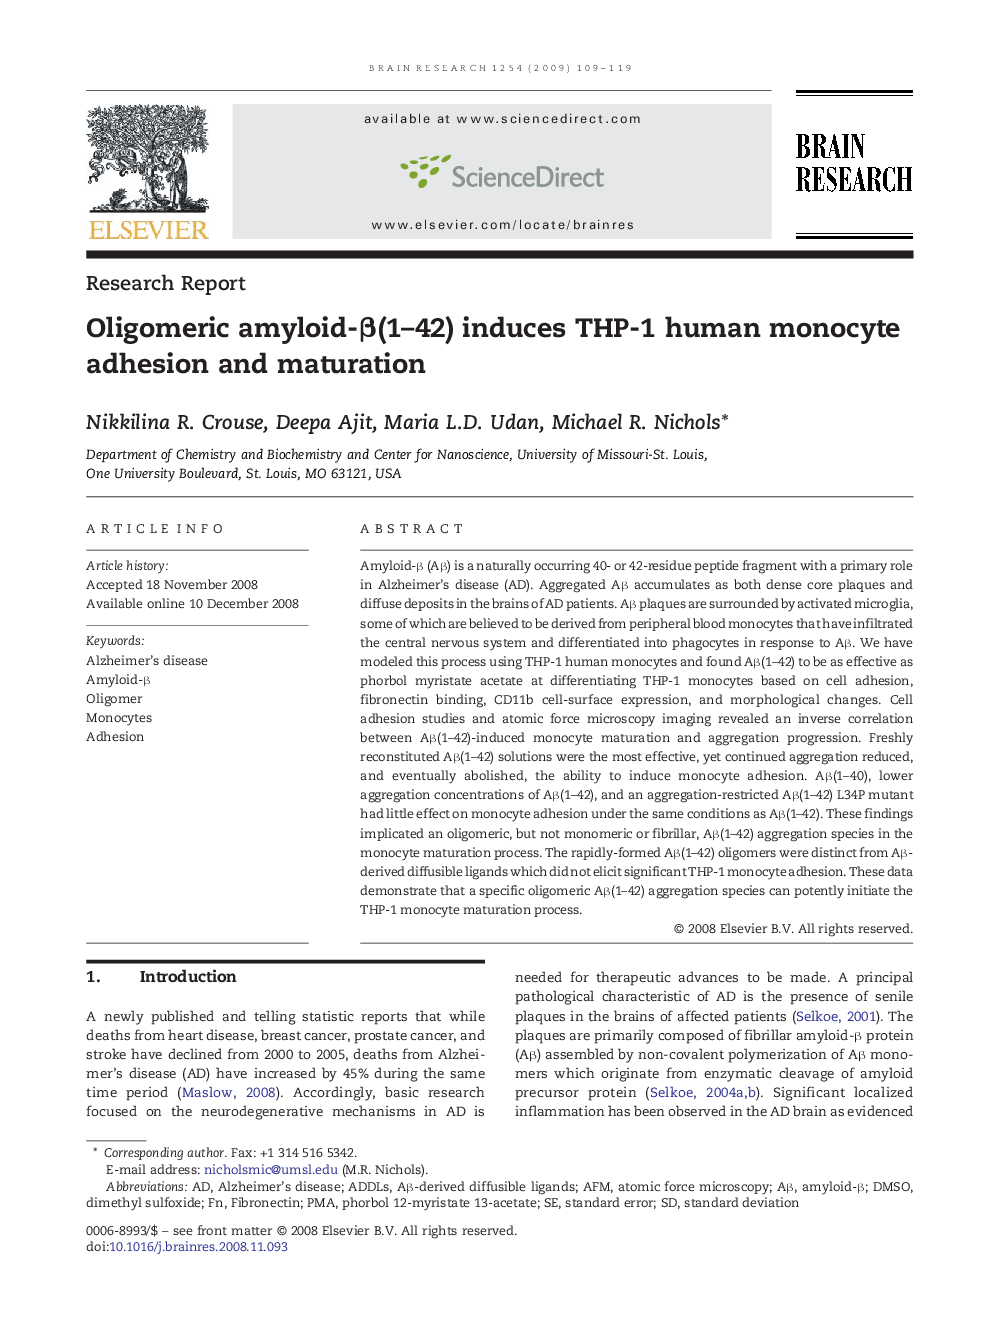 Oligomeric amyloid-Î²(1-42) induces THP-1 human monocyte adhesion and maturation